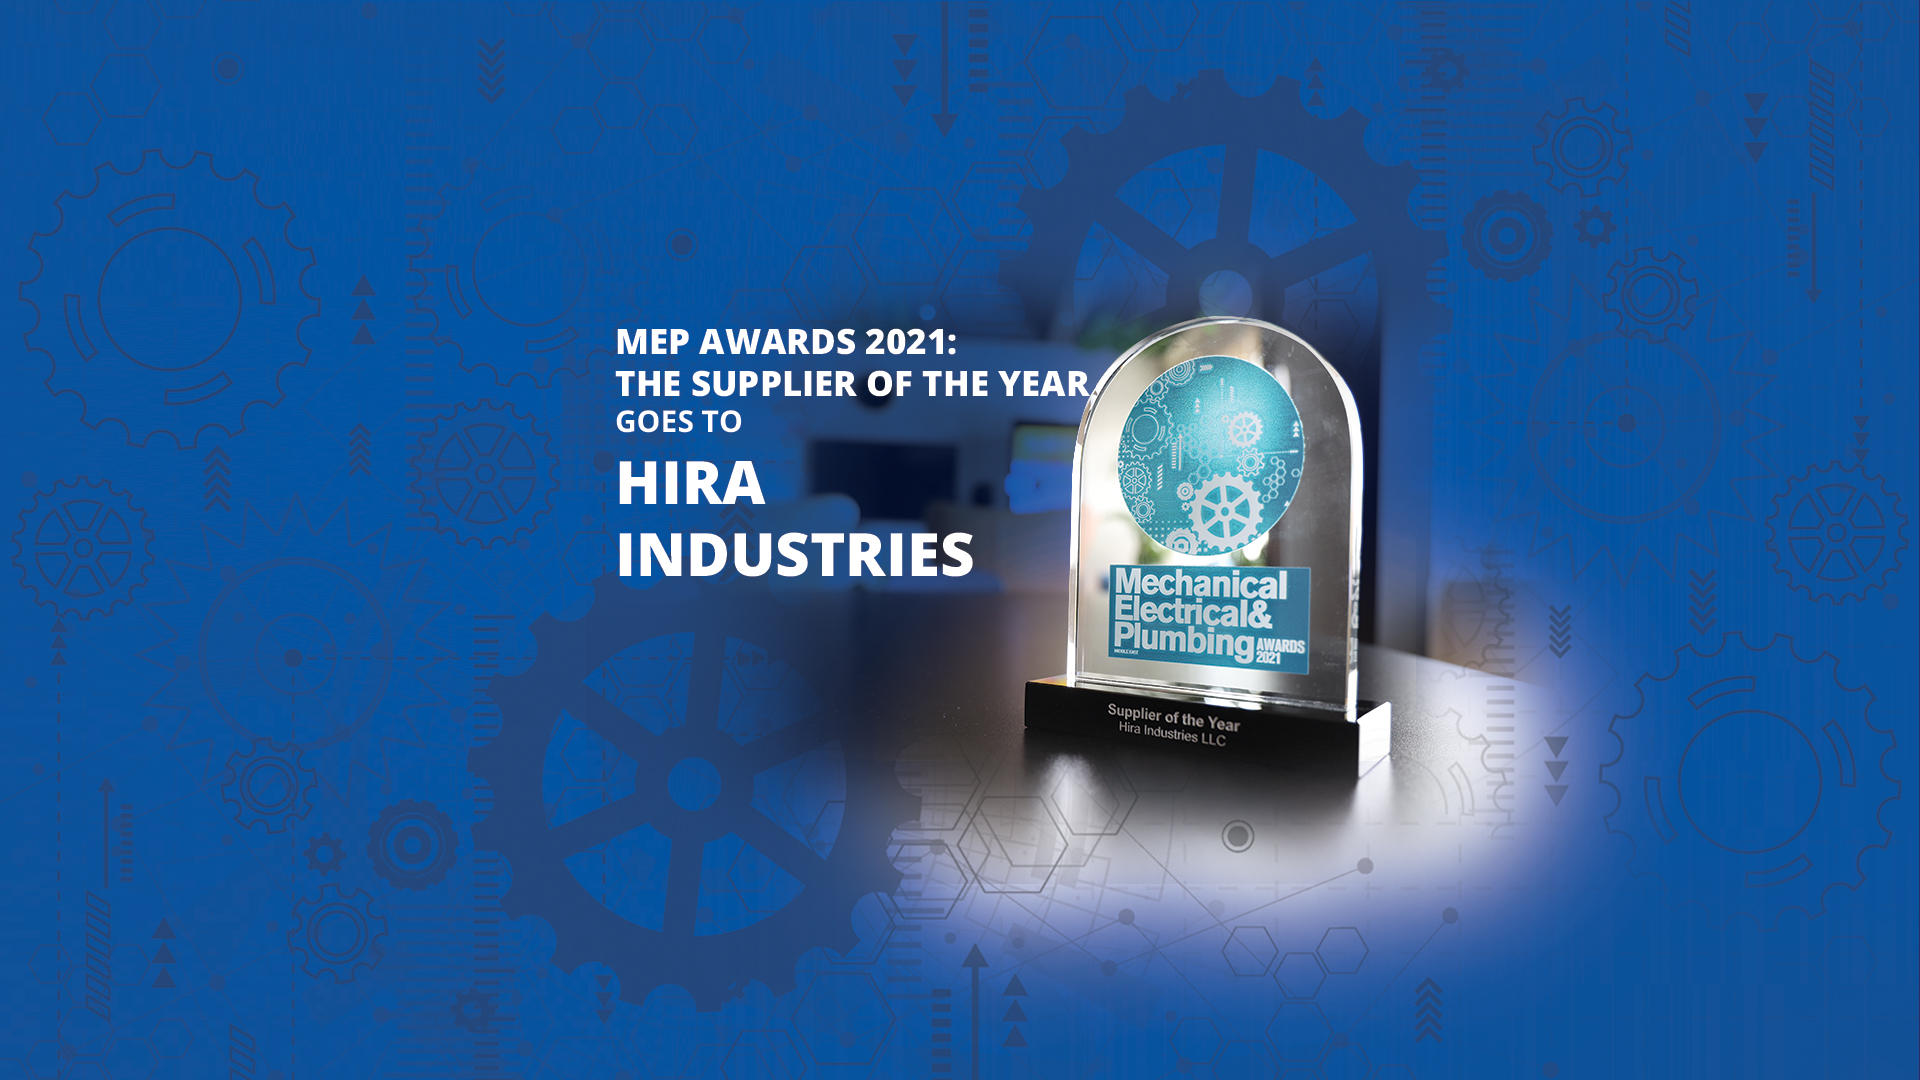 Rhira-MEP-Awards-2021-Banner